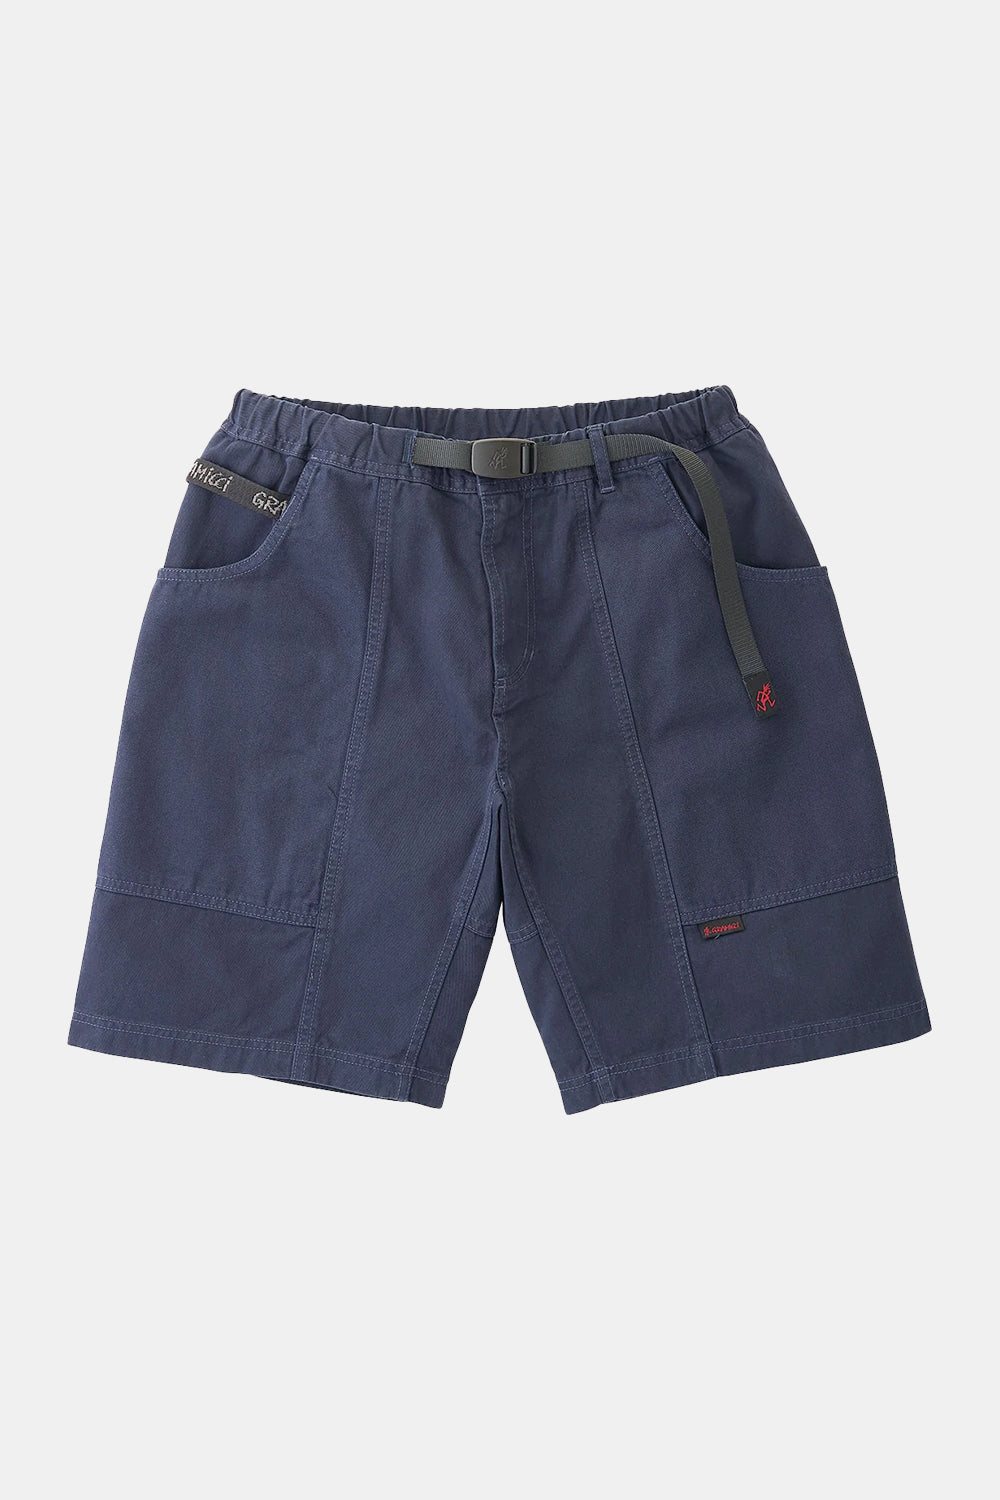 Gramicci Gadget Shorts (Dobbelt Navy)